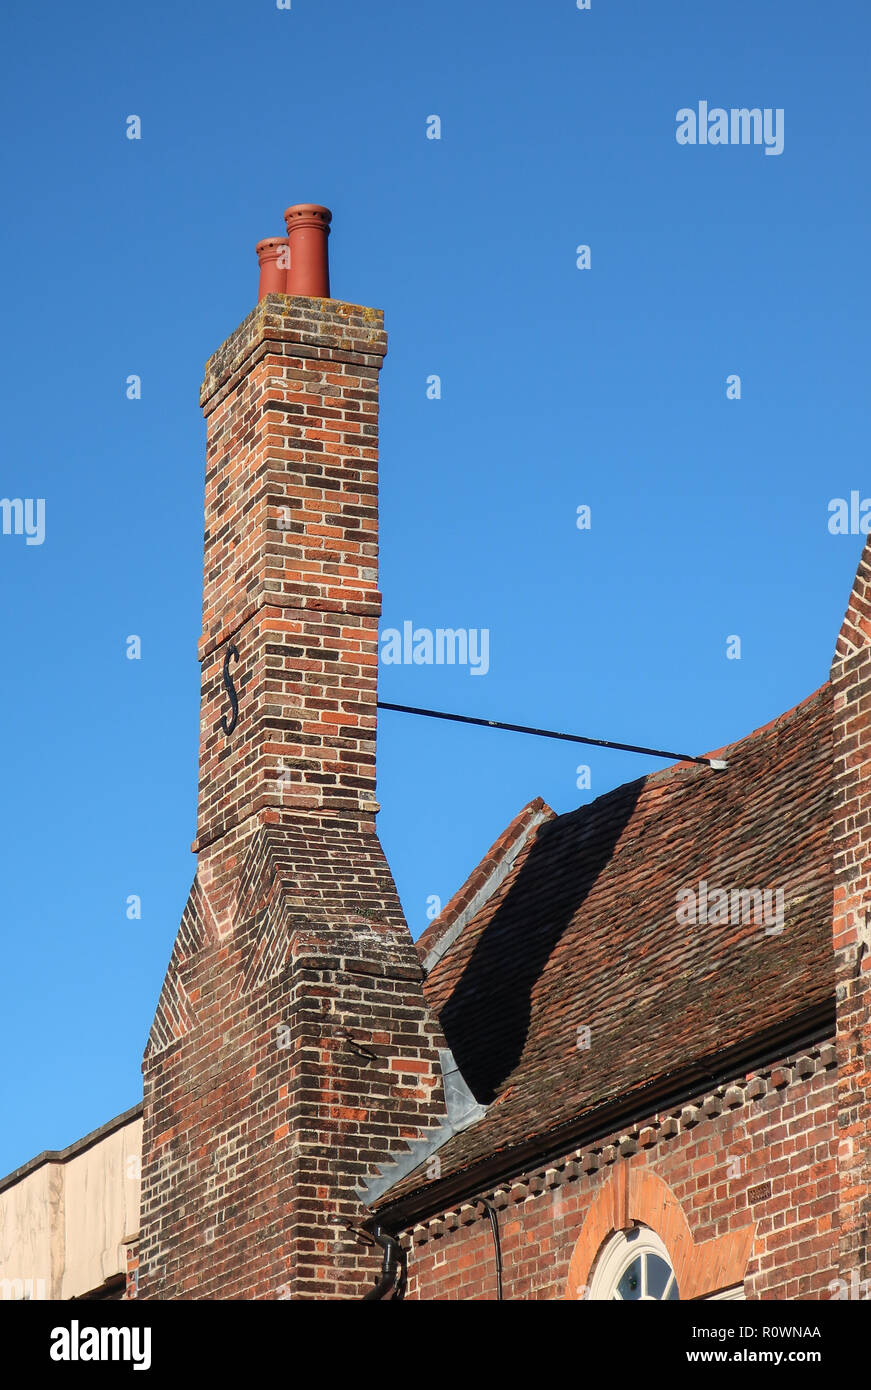 Tall chimney stack, Old Palace, Kneesworth Street, Royston, Hertfordshire, England, UK Stock Photo